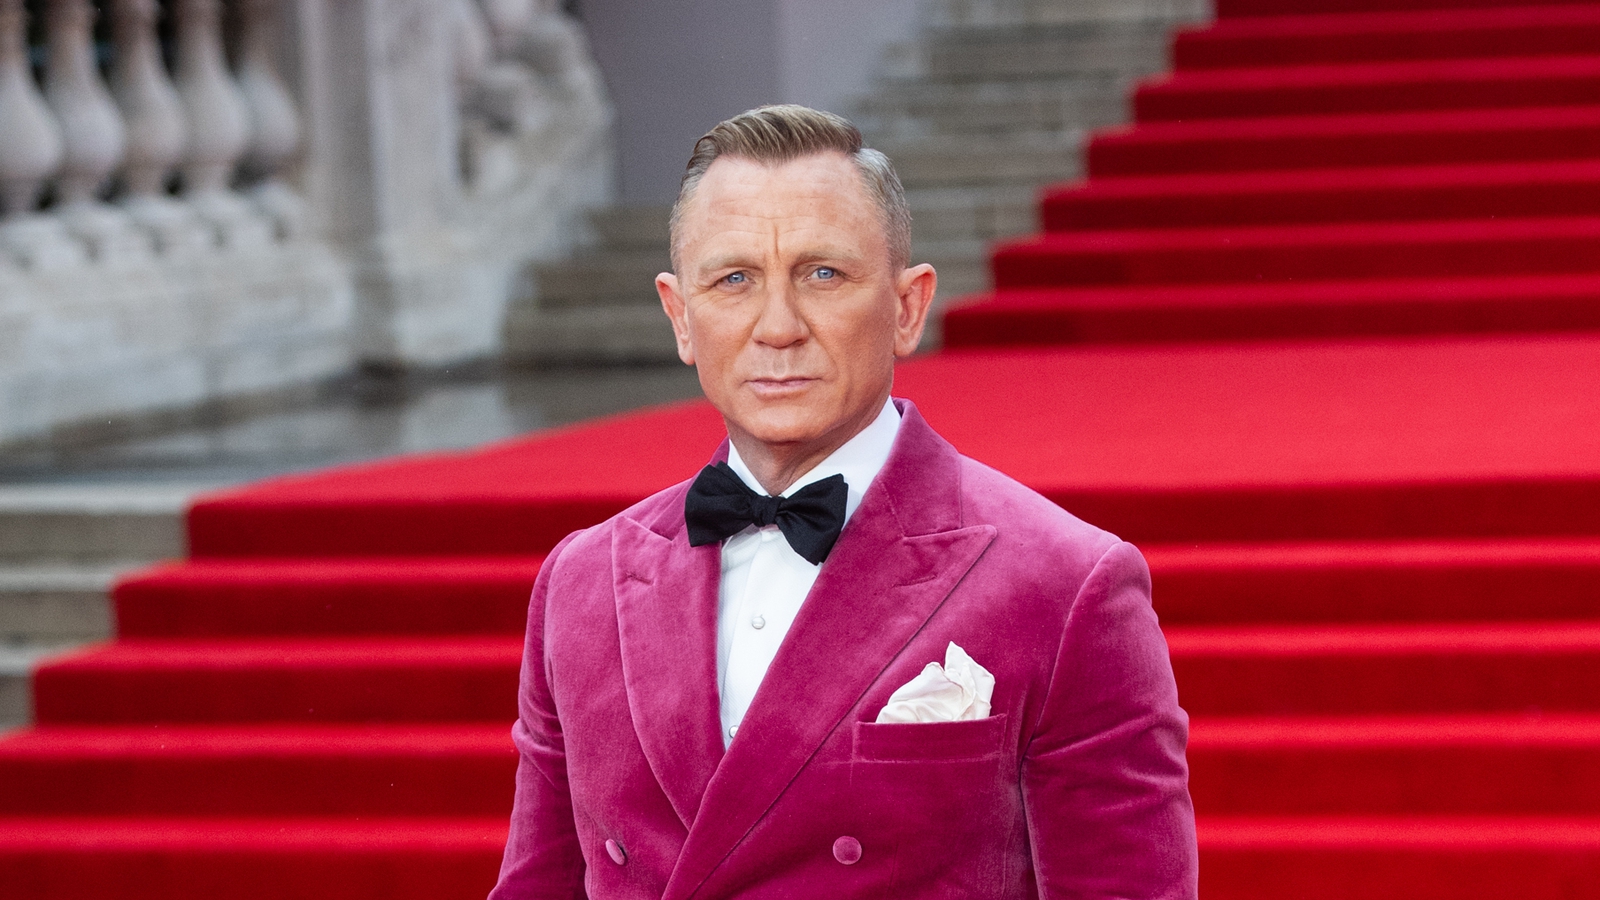 Bond Girl Ana de Armas walks the red carpet in 007-inspired look - The  Irish News